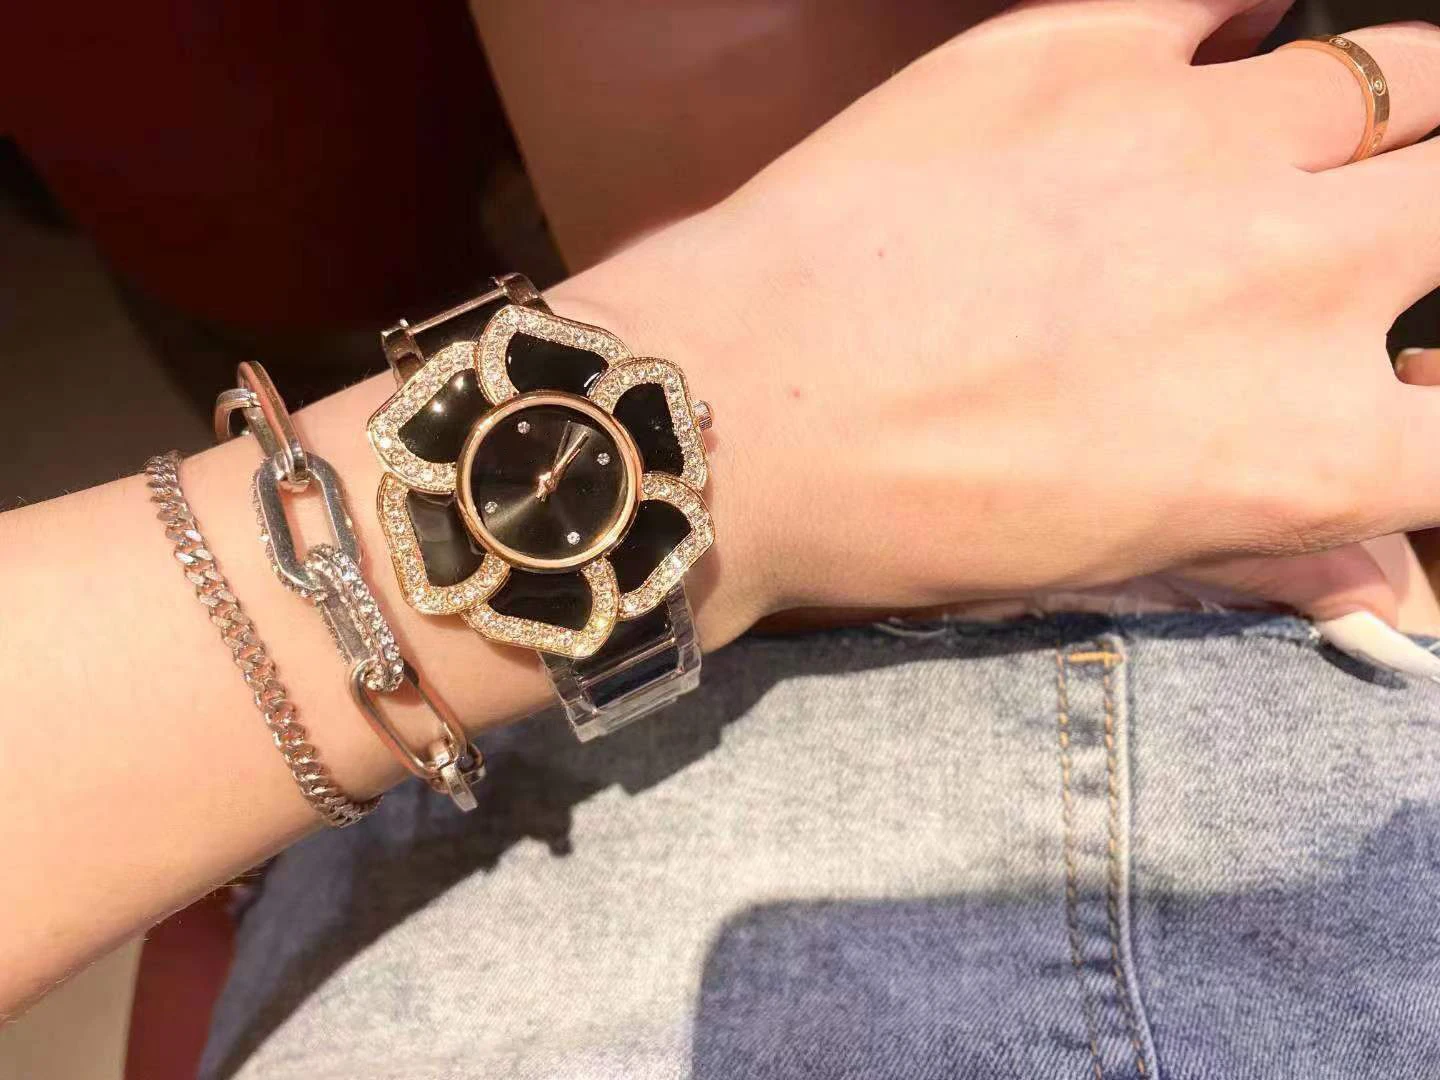 Top fashion Luxury brand watches for women Cermet strap Petal shape Simplicity waterproof quartz watch Diamond inlay enlarge